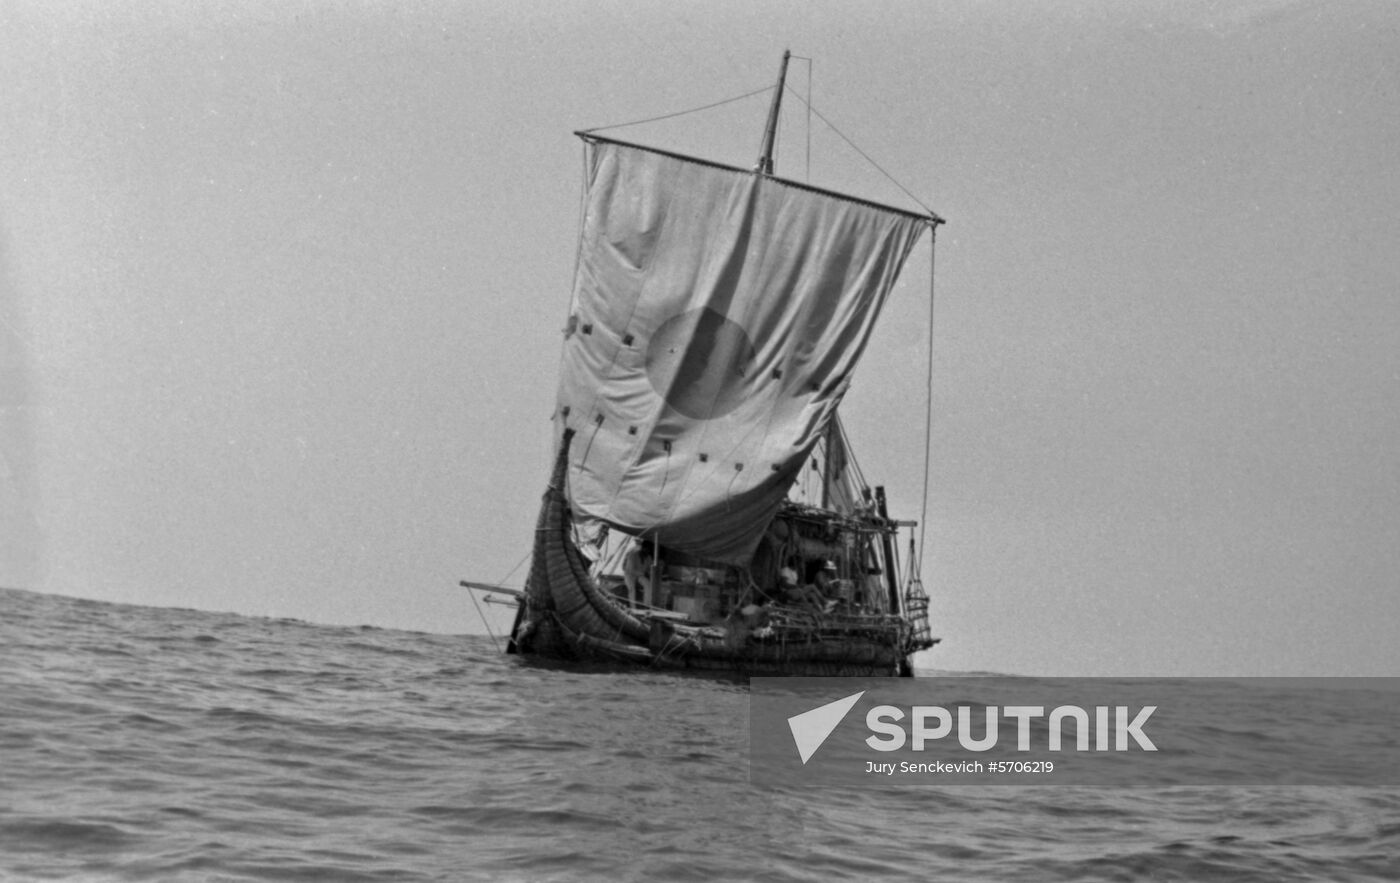 Thor Heyerdahl's expedition on Ra II boat